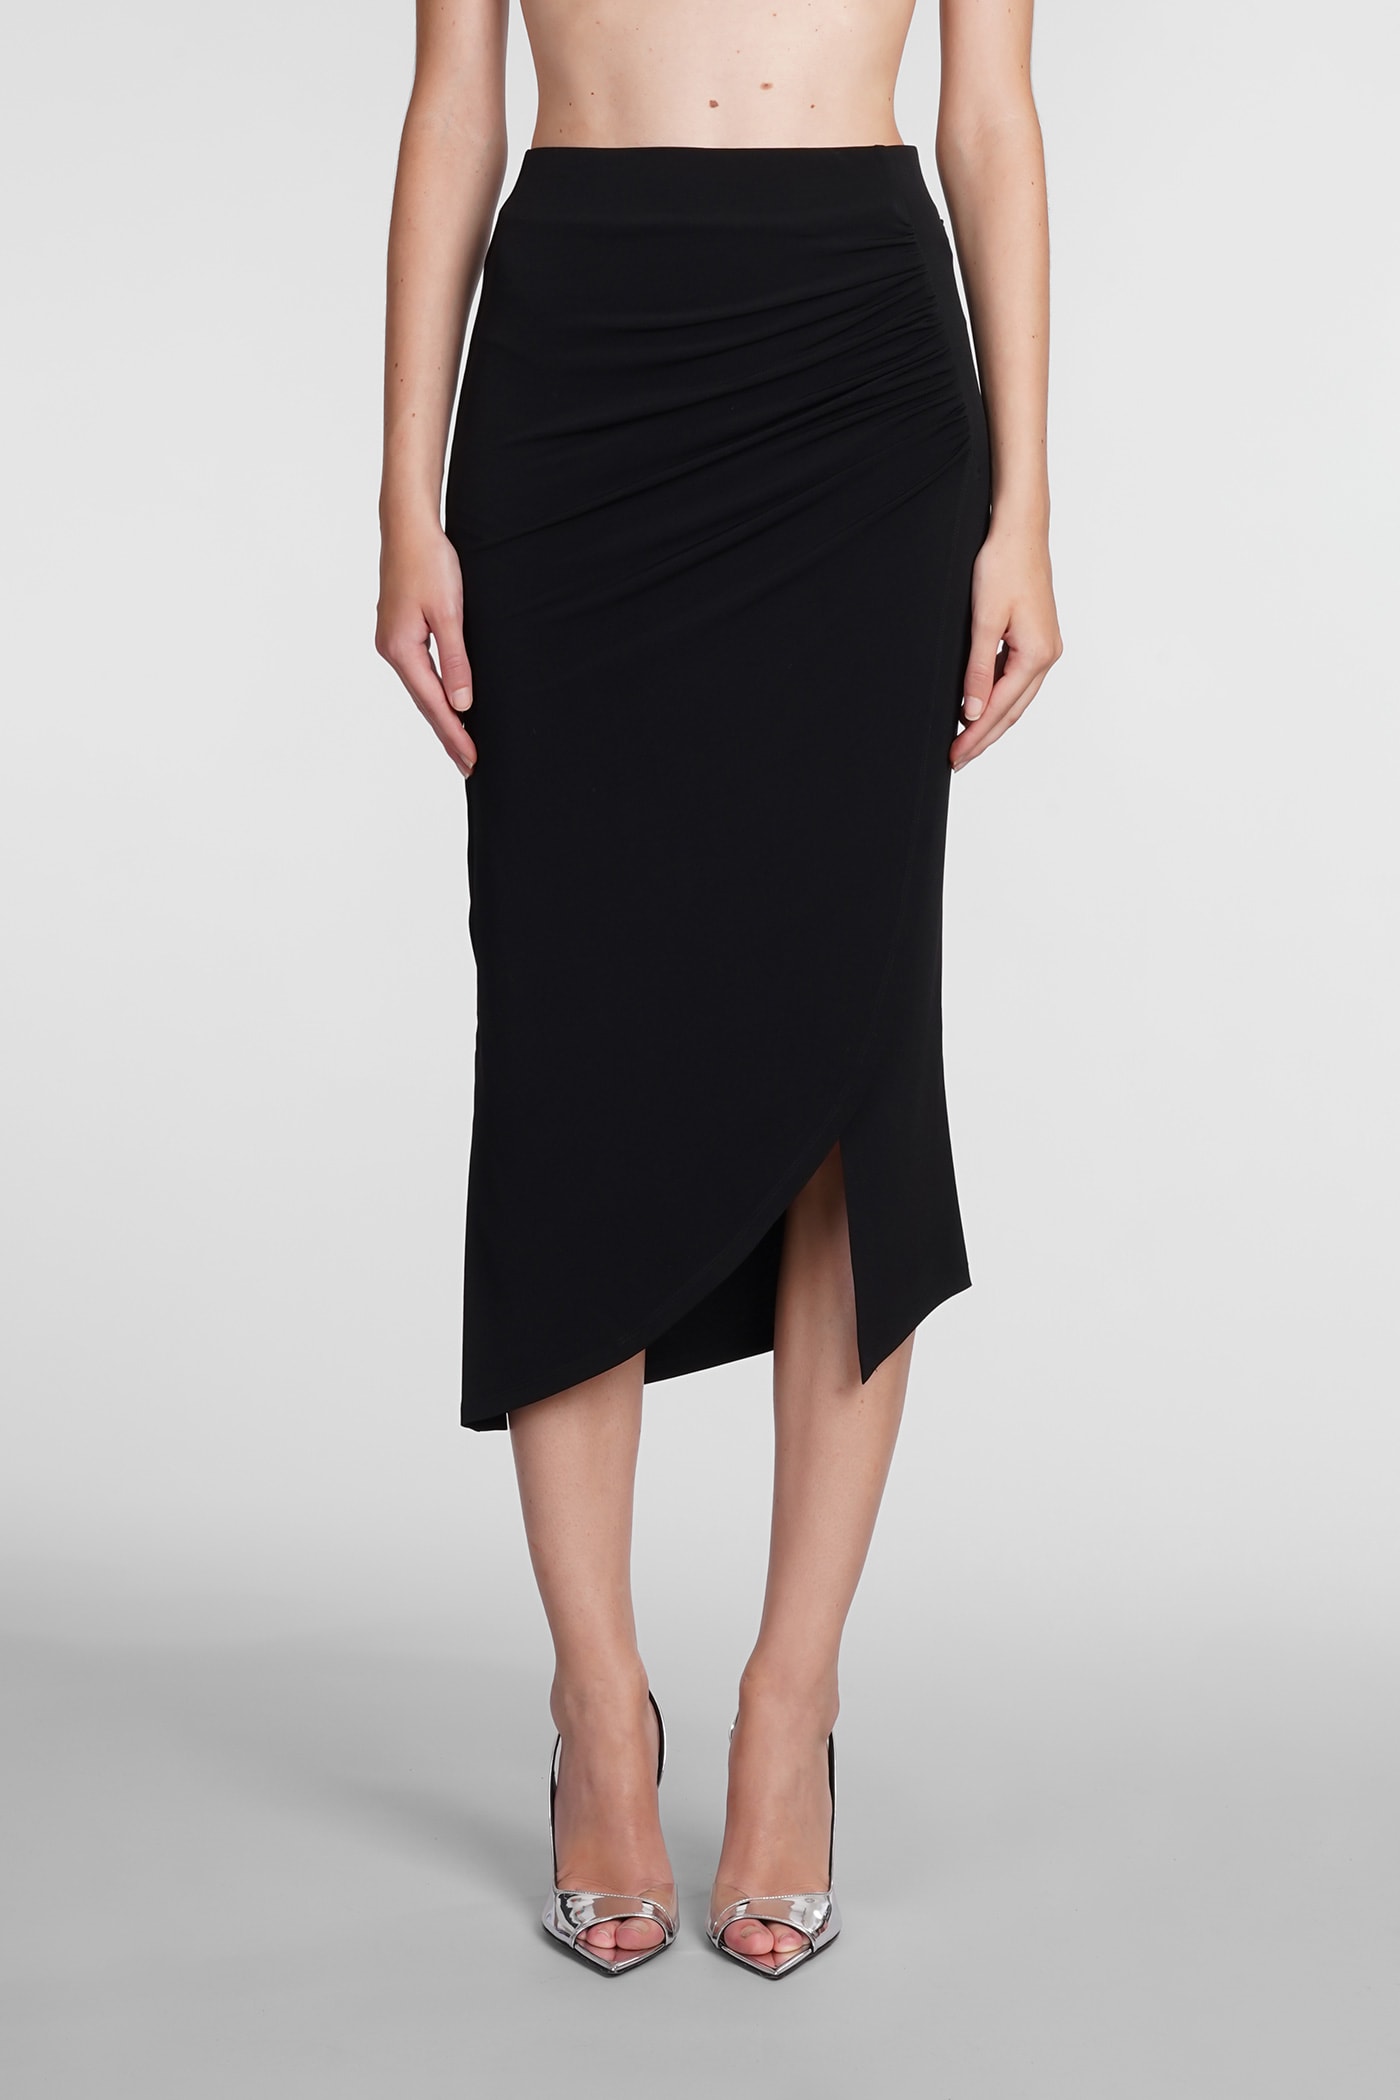 Herve Leger Skirt In Black Polyester